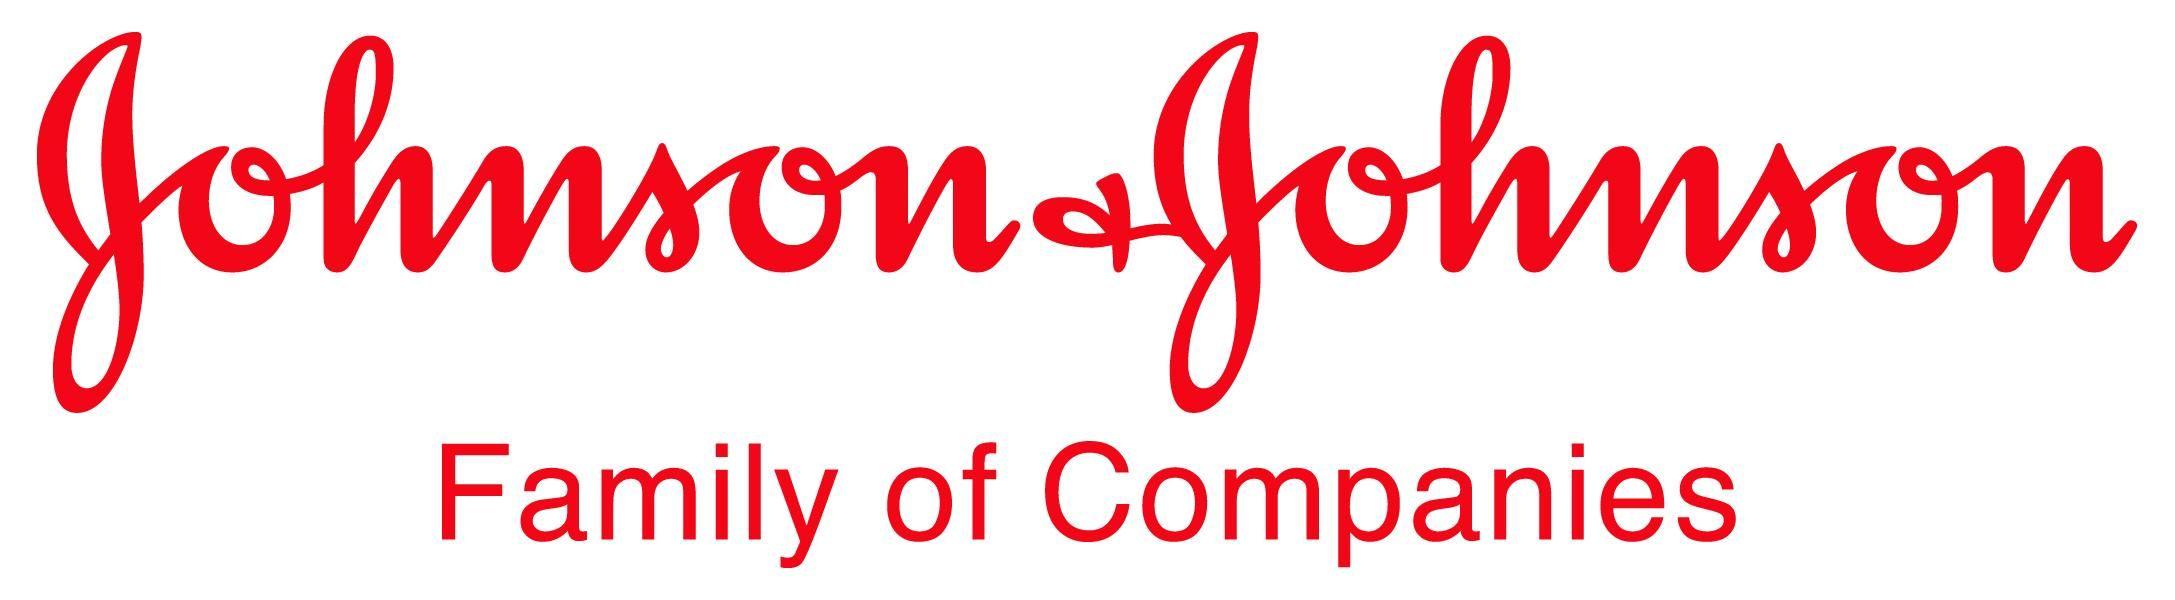 Johnson and Johnson Logo - Update Nov 2016 - by Sarah Lobley [Infographic]